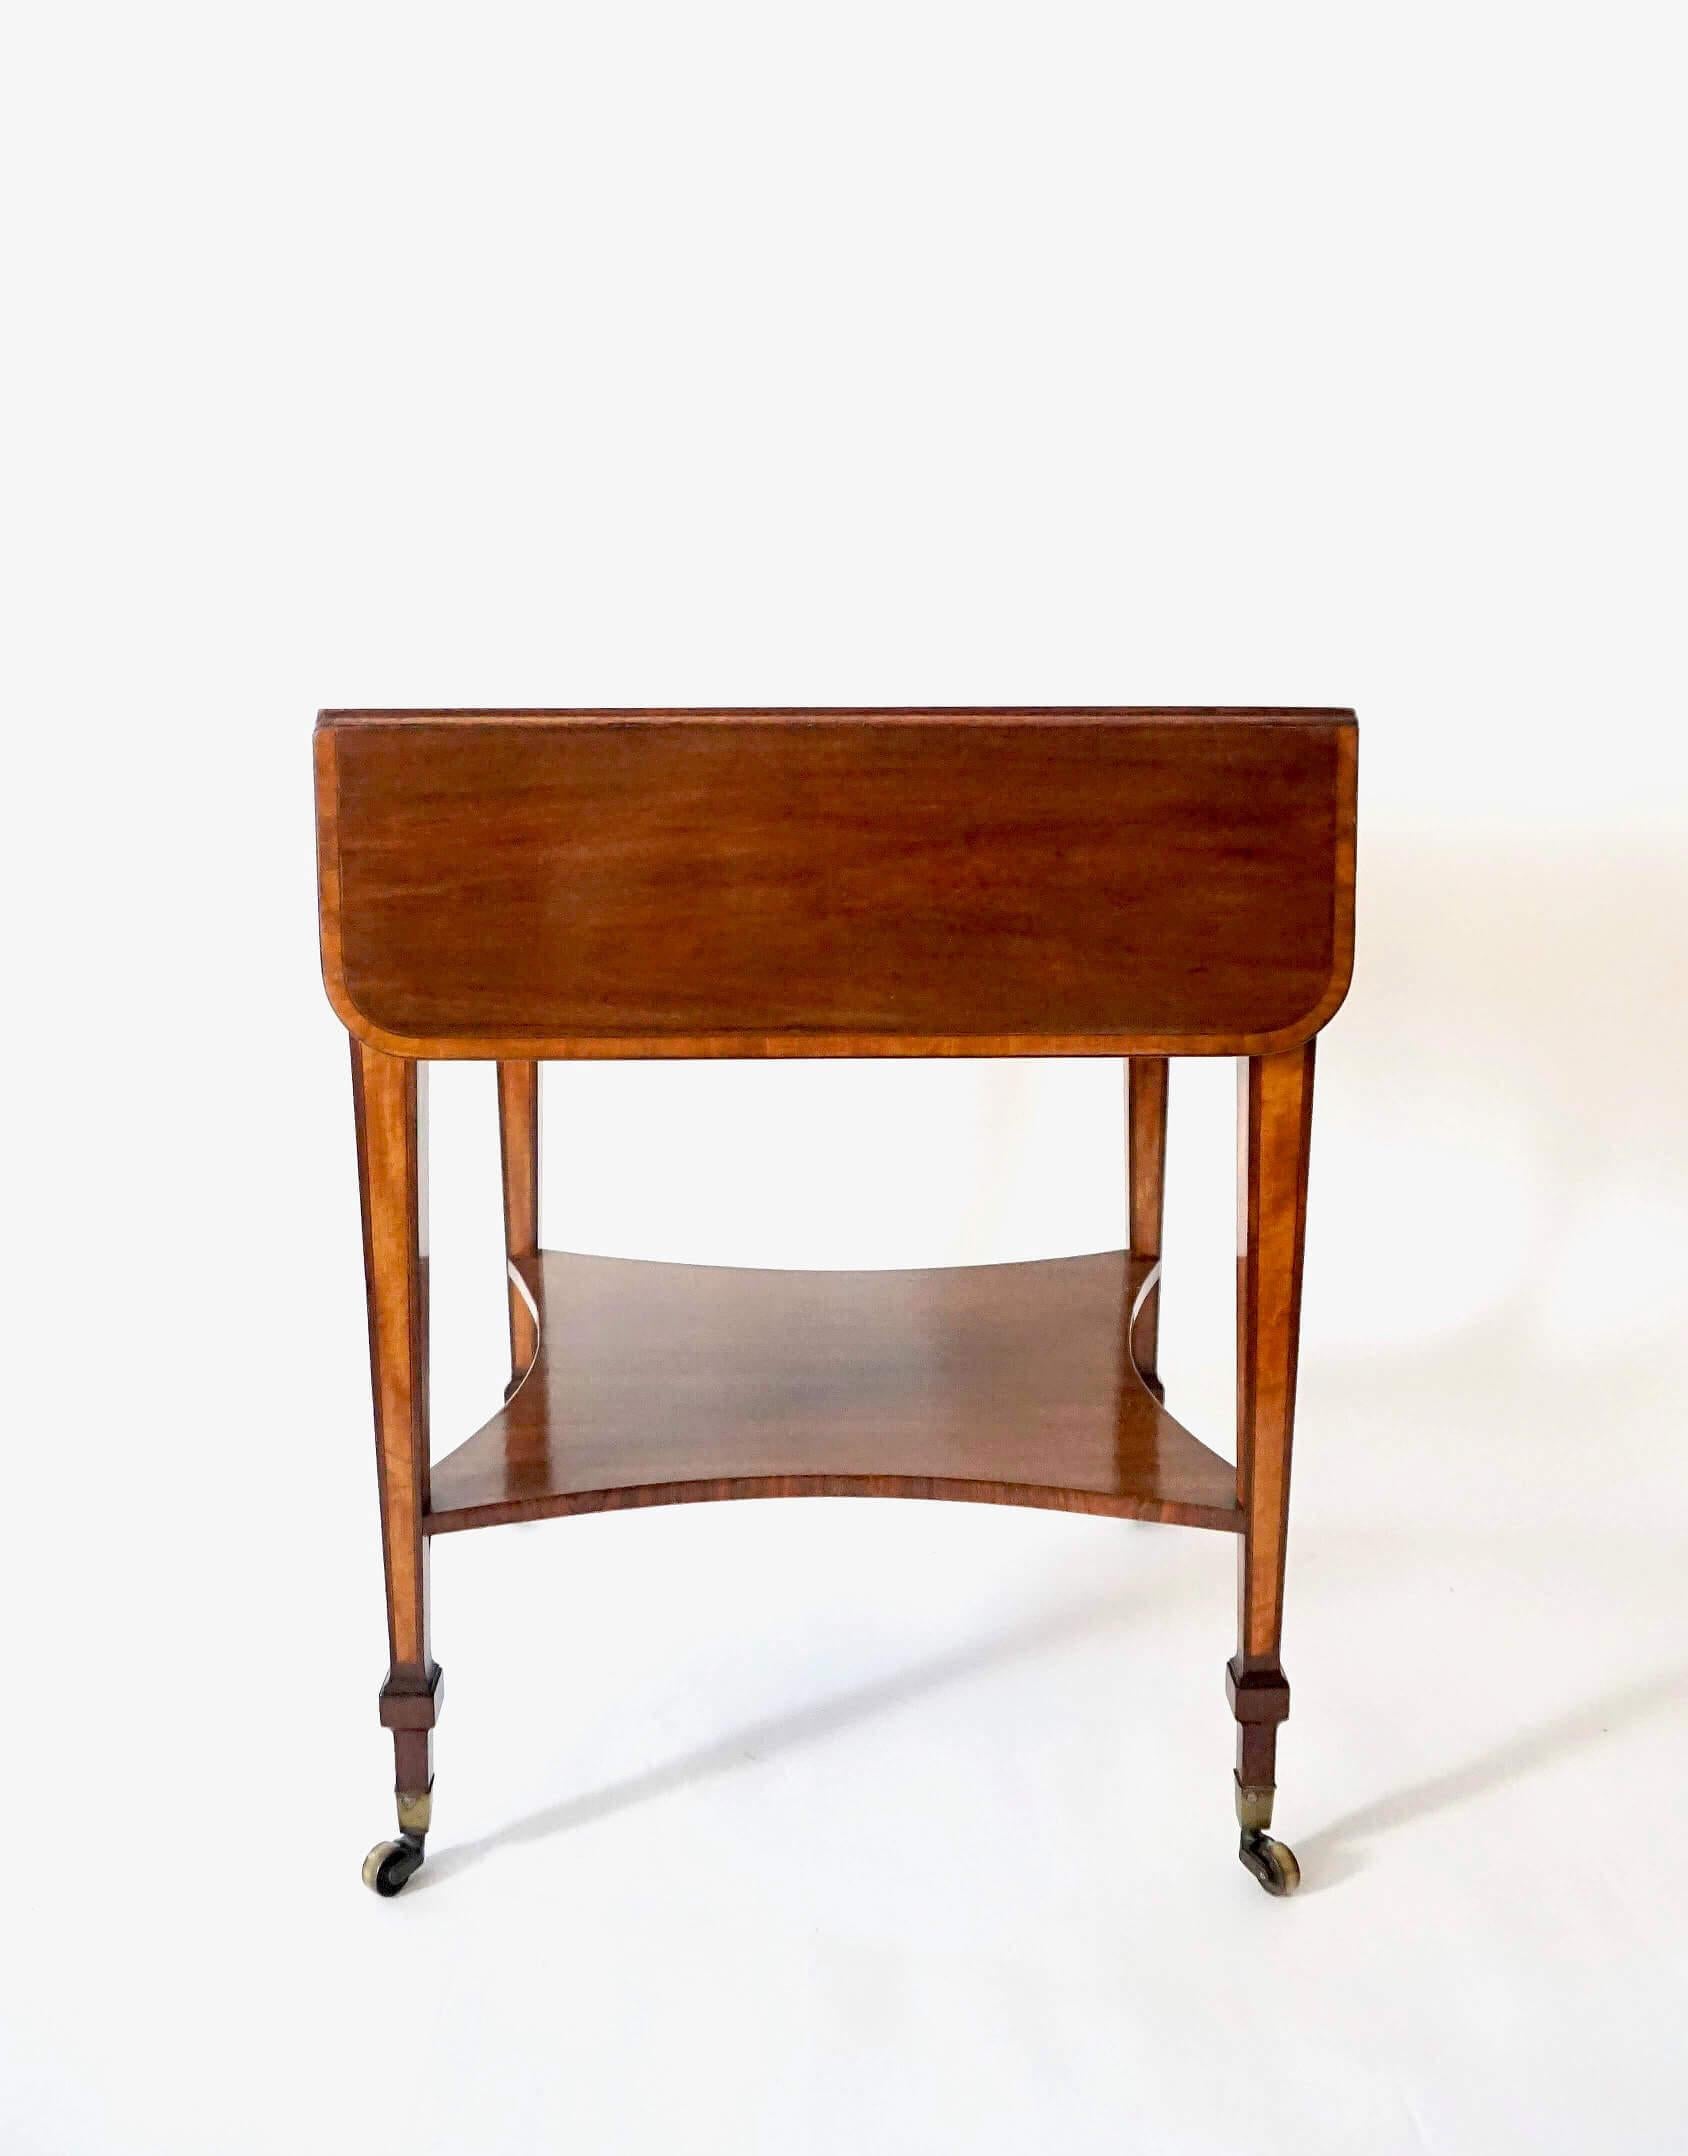 Early 19th Century English George III Sheraton Rosewood & Satinwood Pembroke Table, circa 1800 For Sale